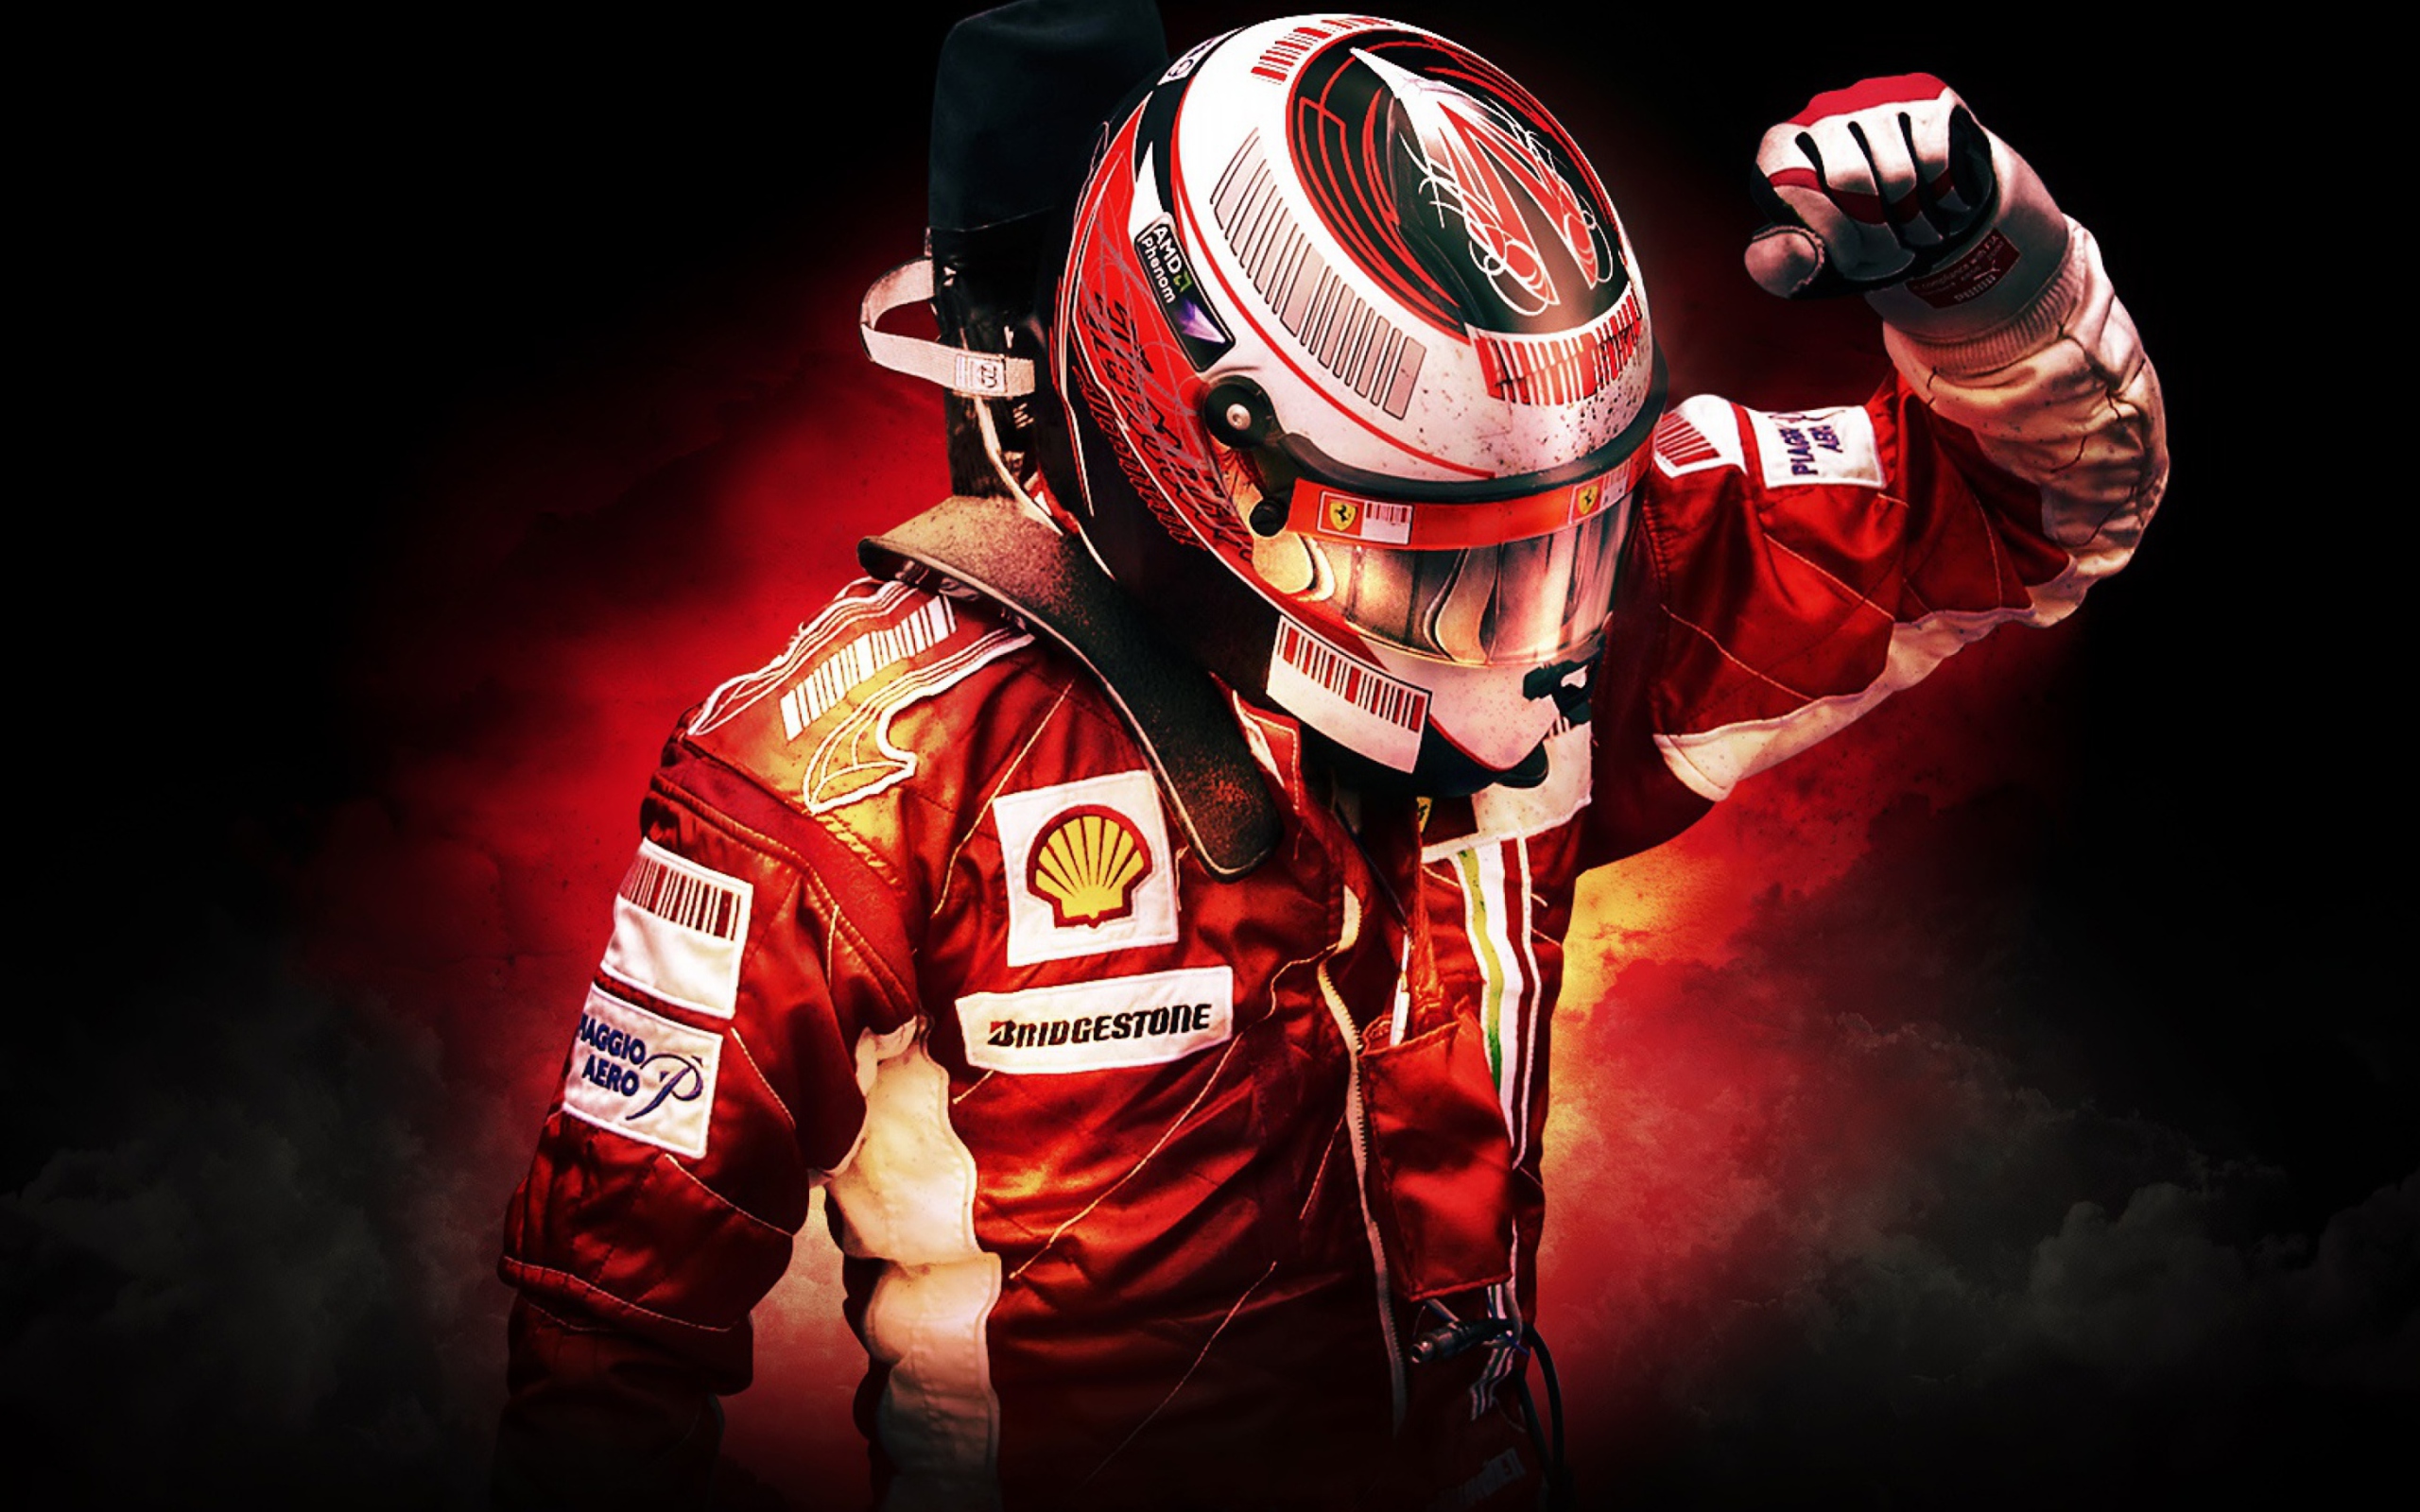 F1 Racer wallpaper 2560x1600